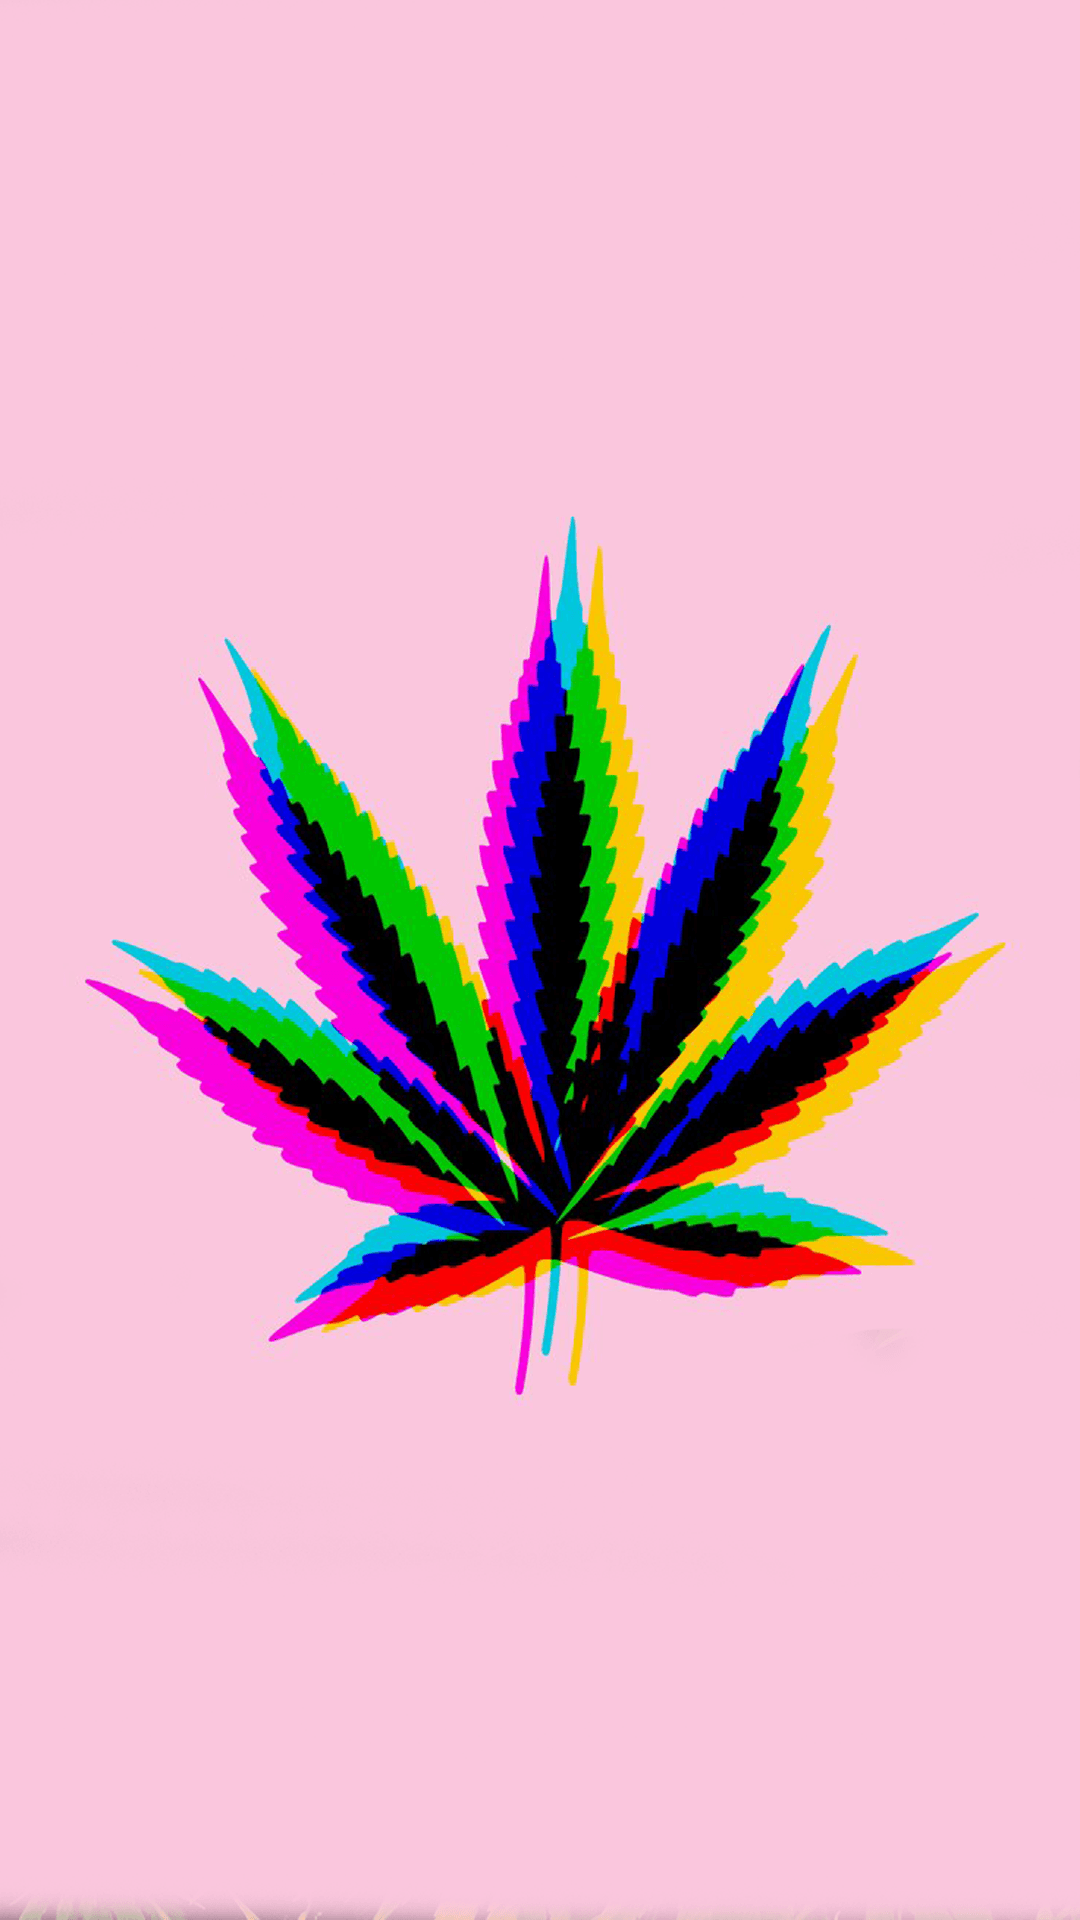 Cali marijuana logo s on